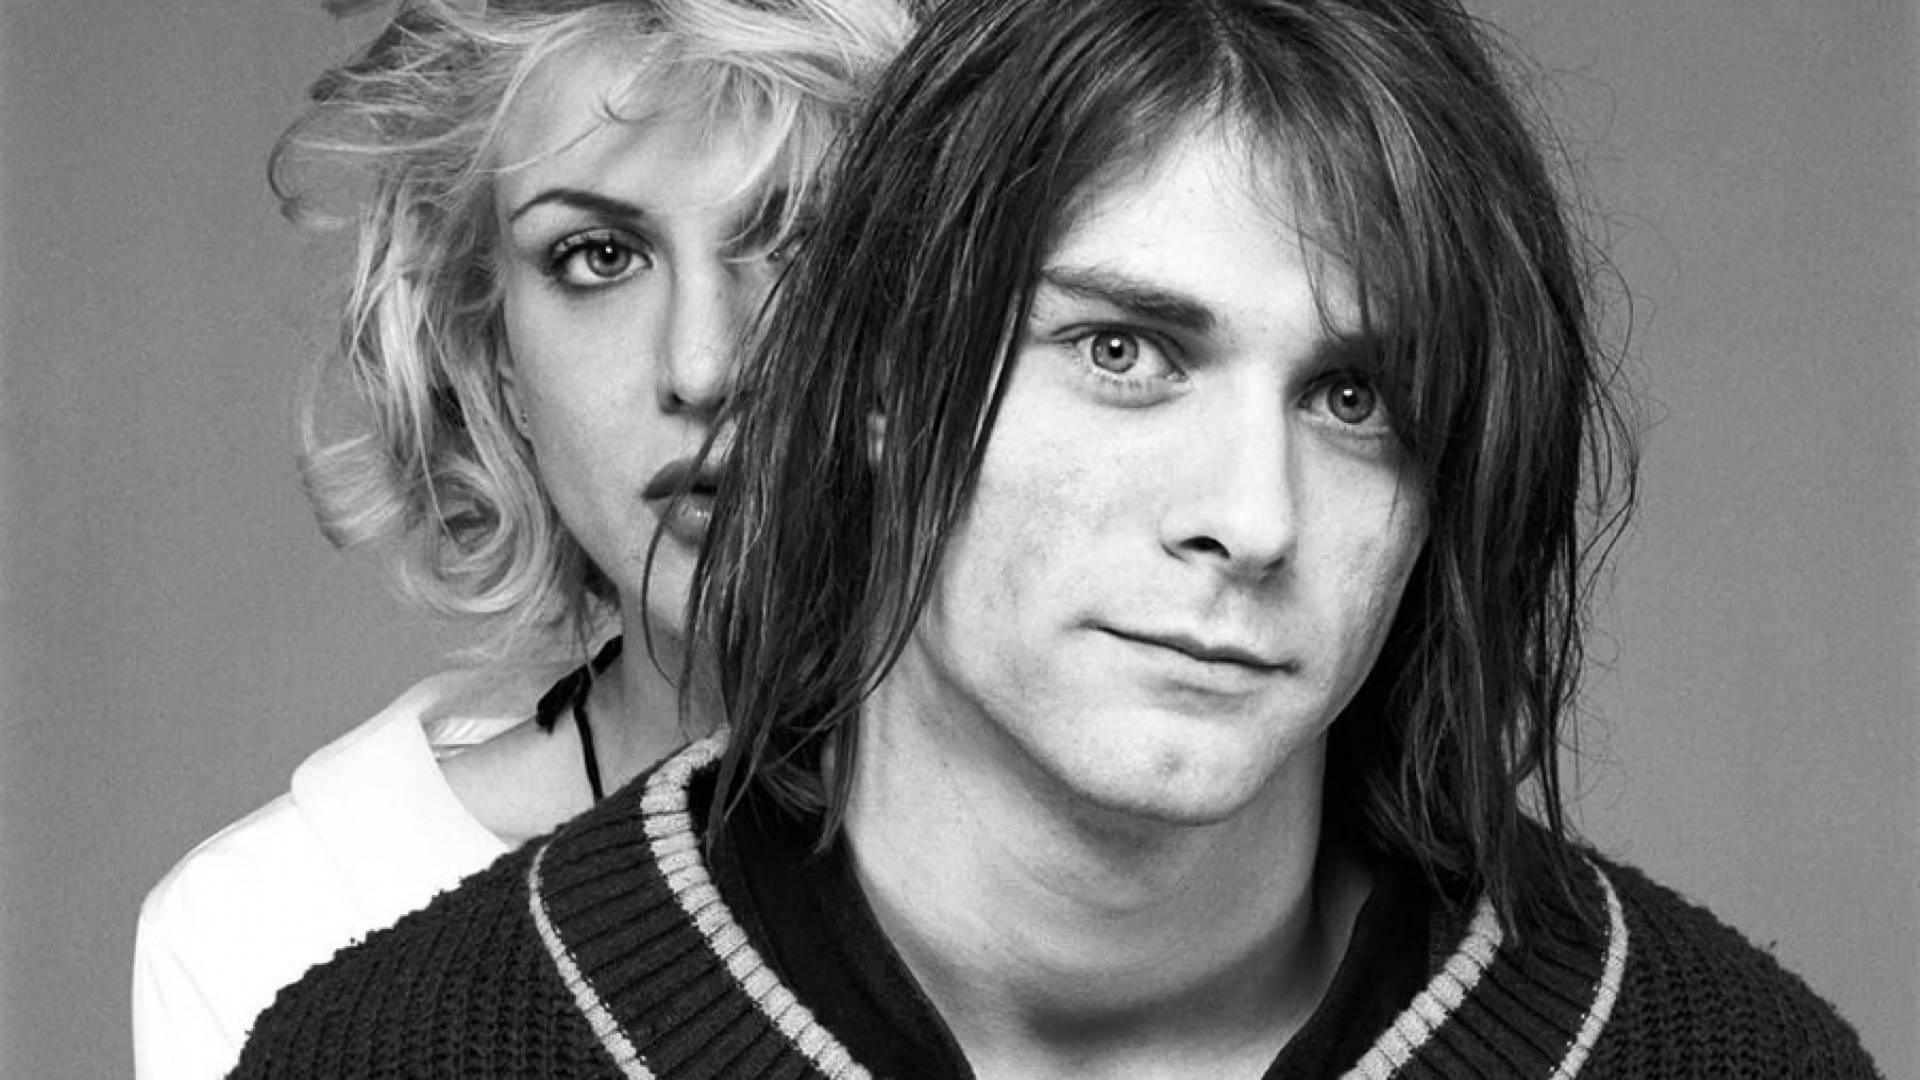 Kurt Cobain With Courtney Love Wallpaper